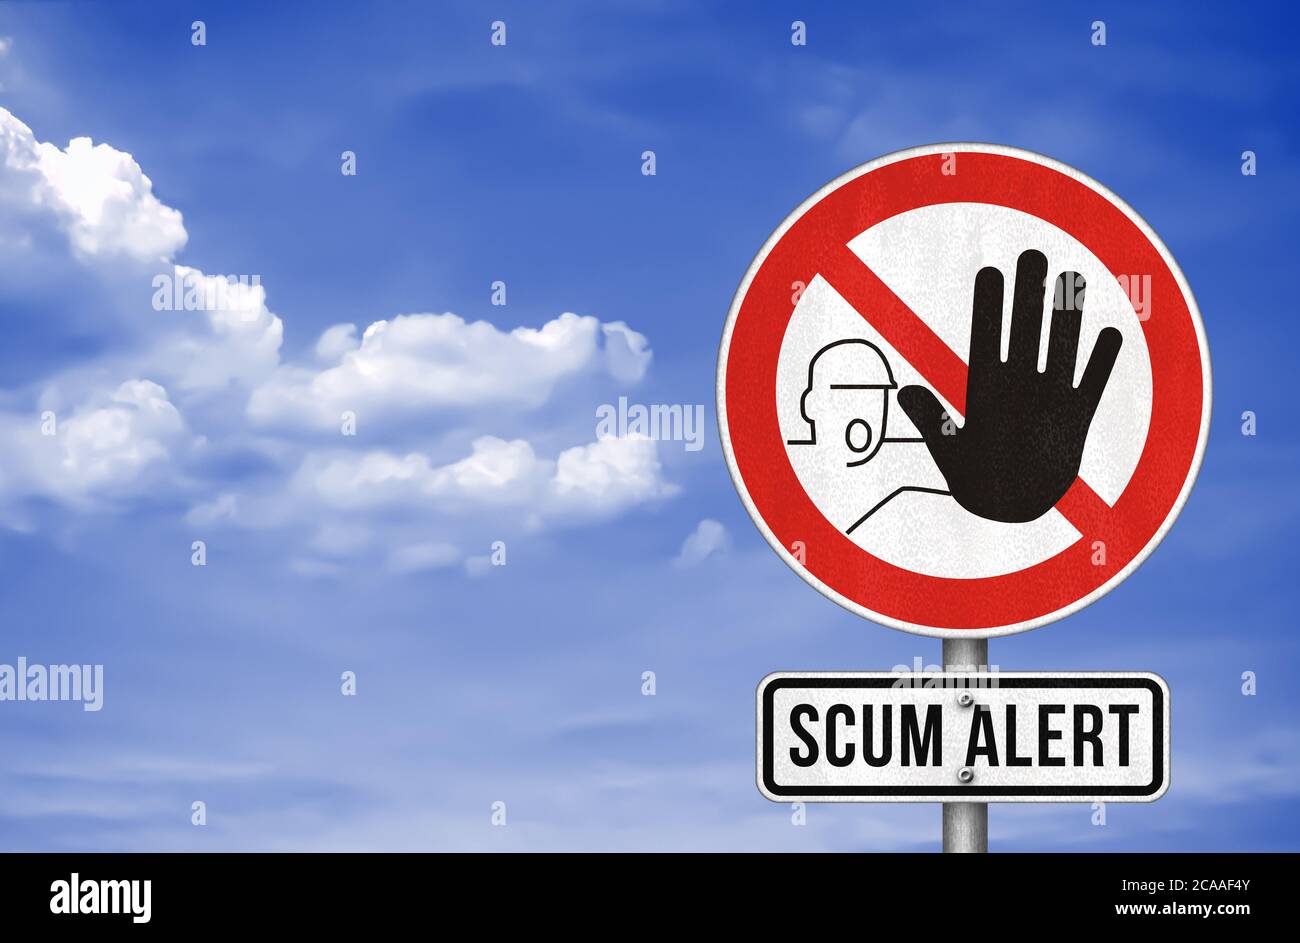 Scum Alert - road sign warning Stock Photo